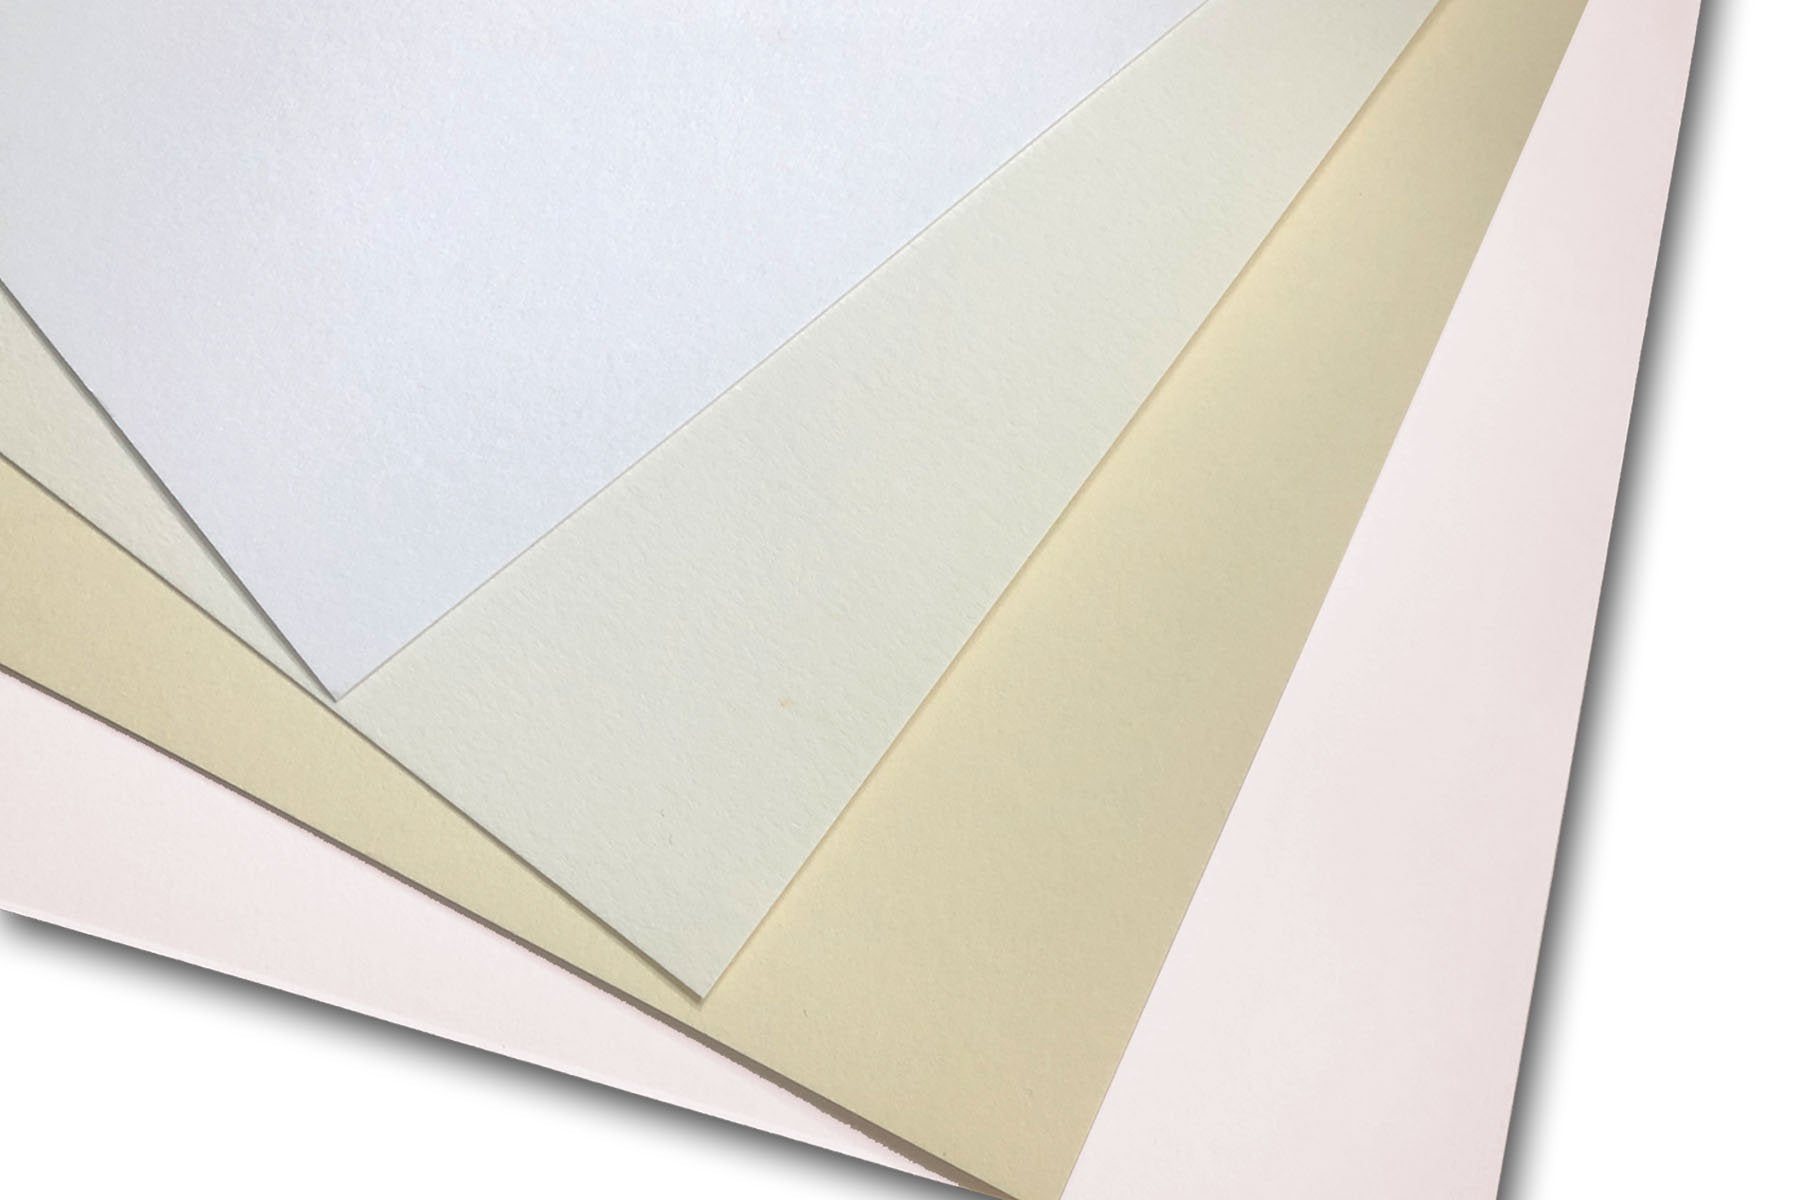 Neenah Cotton Letterpress Finish 90 lb Card stock for Letterpress -  CutCardStock